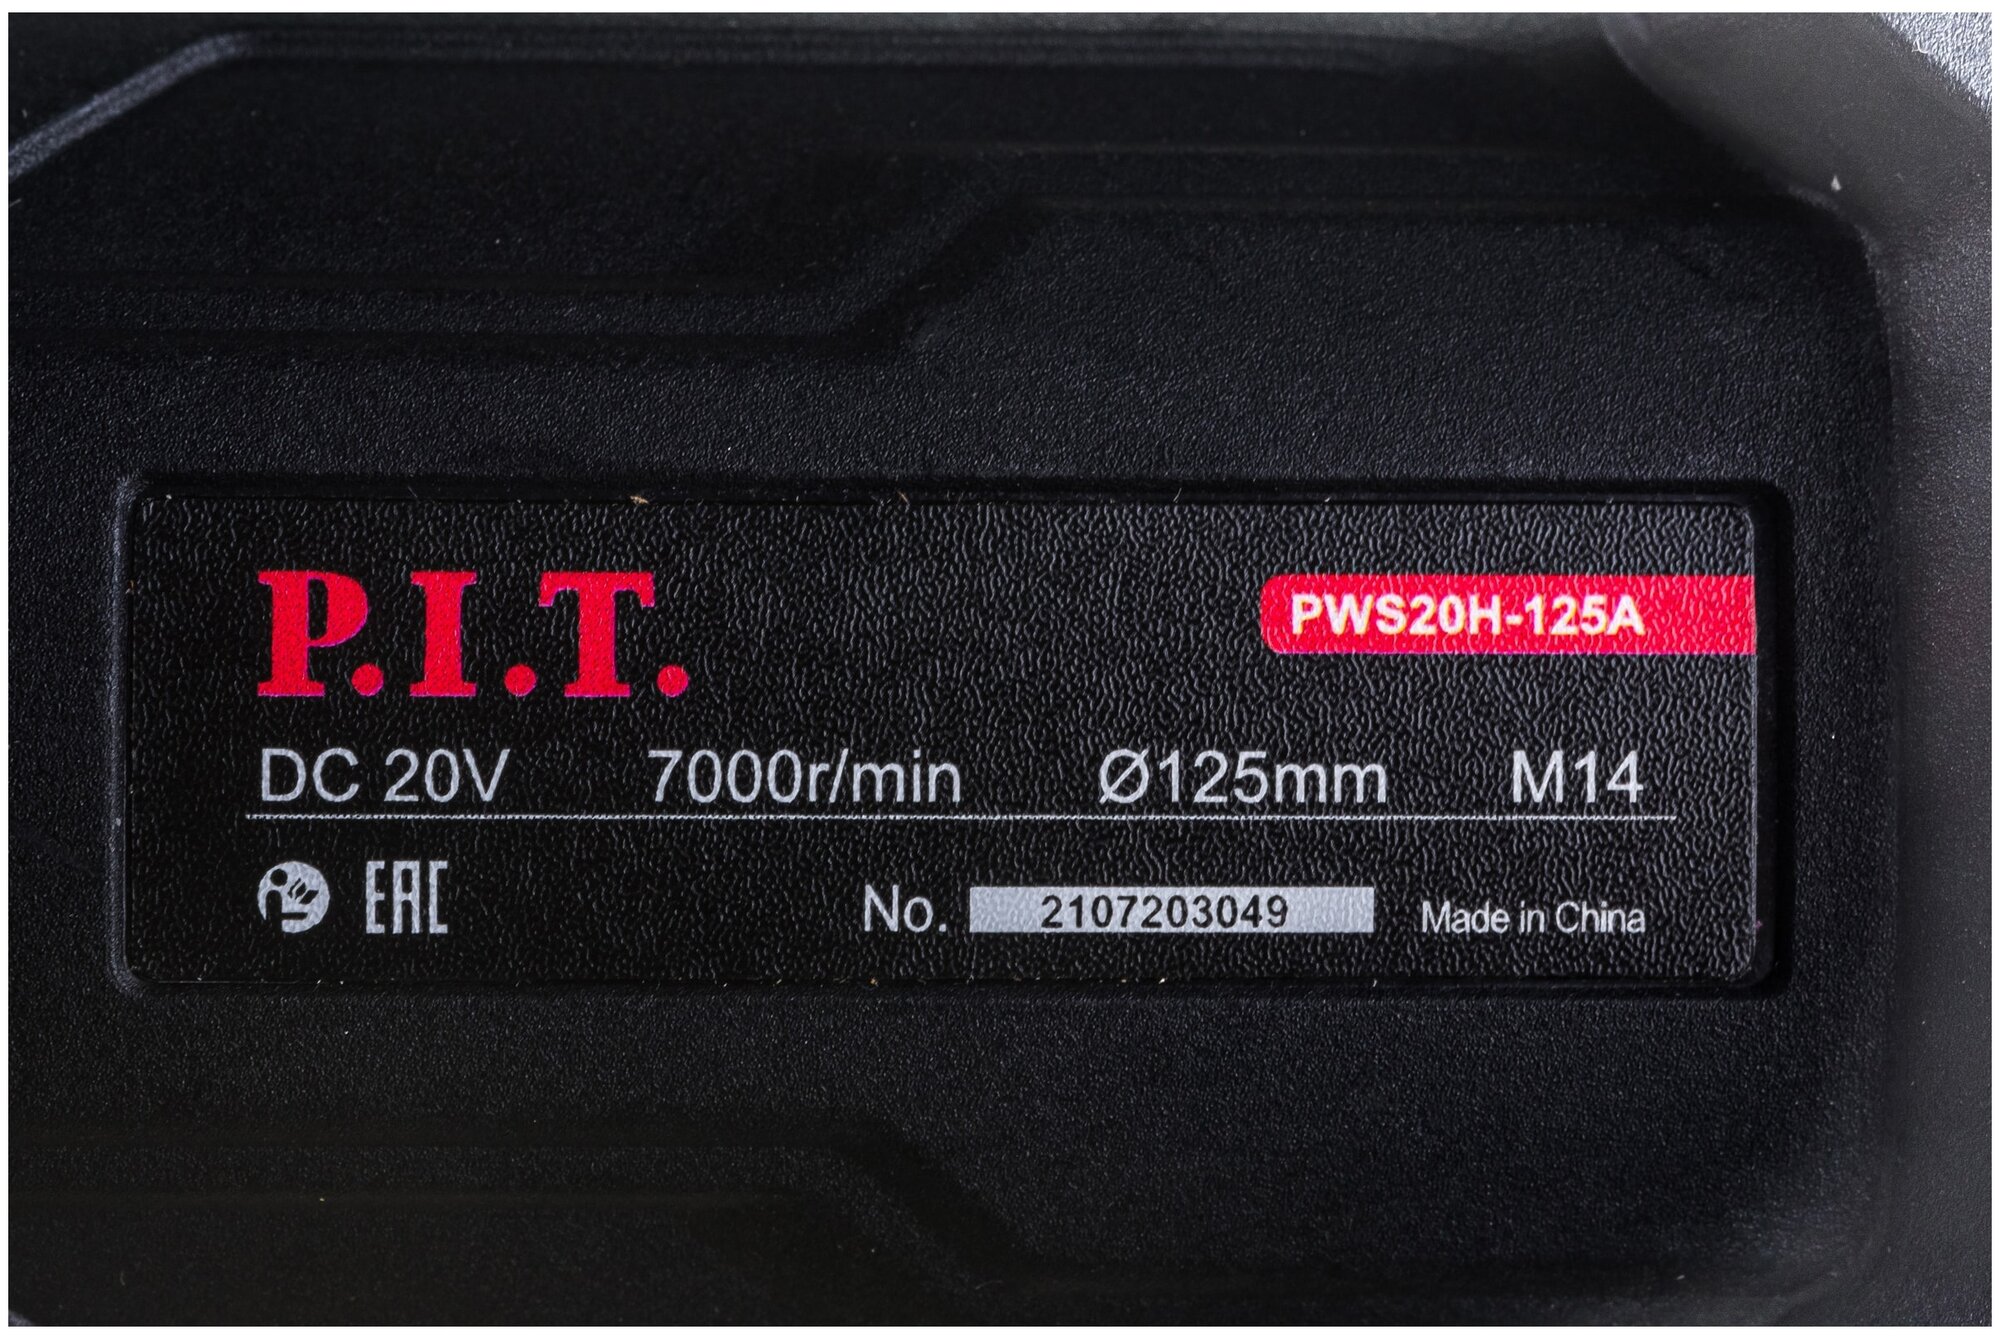 Аккумуляторная УШМ P.I.T. PWS20H-125A/1, 125 мм серый - фотография № 3